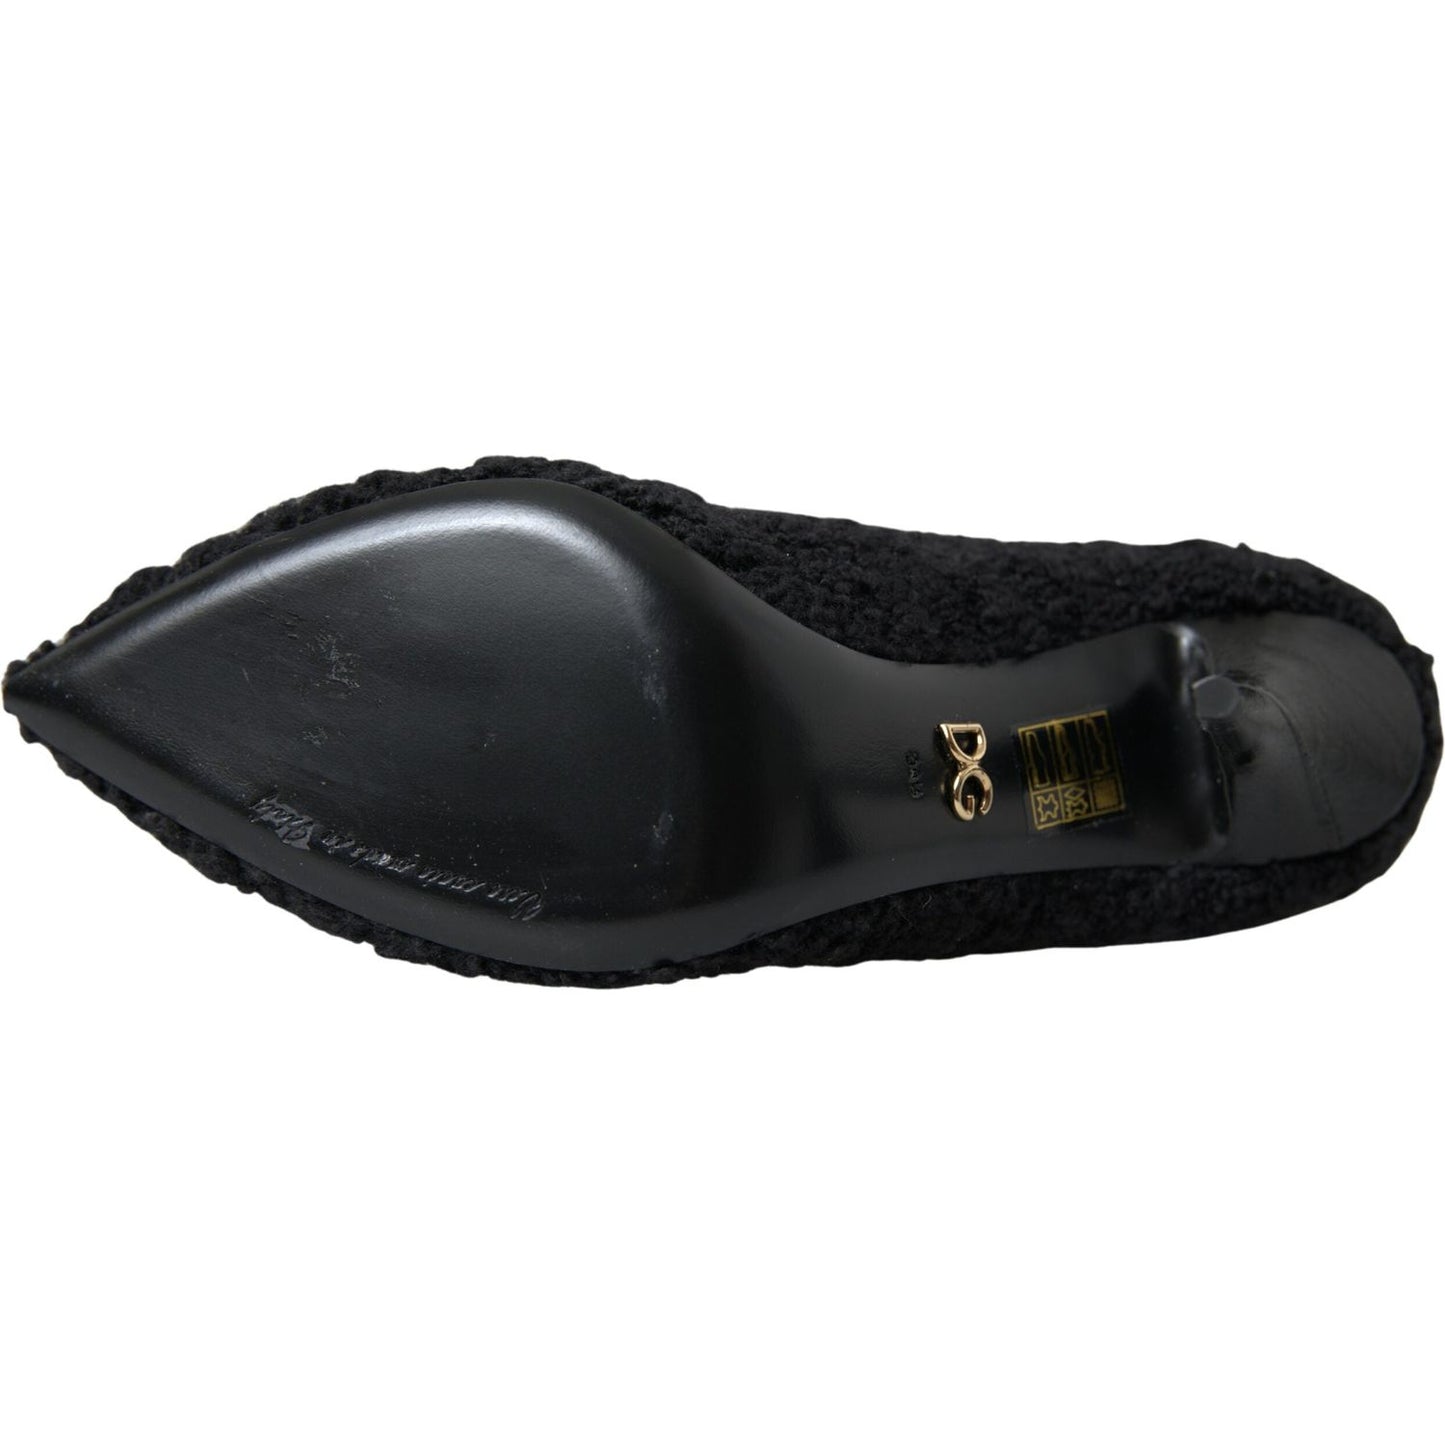 Dolce & Gabbana Elegant Virgin Wool Mid Calf Boots black-stiletto-heels-mid-calf-boots